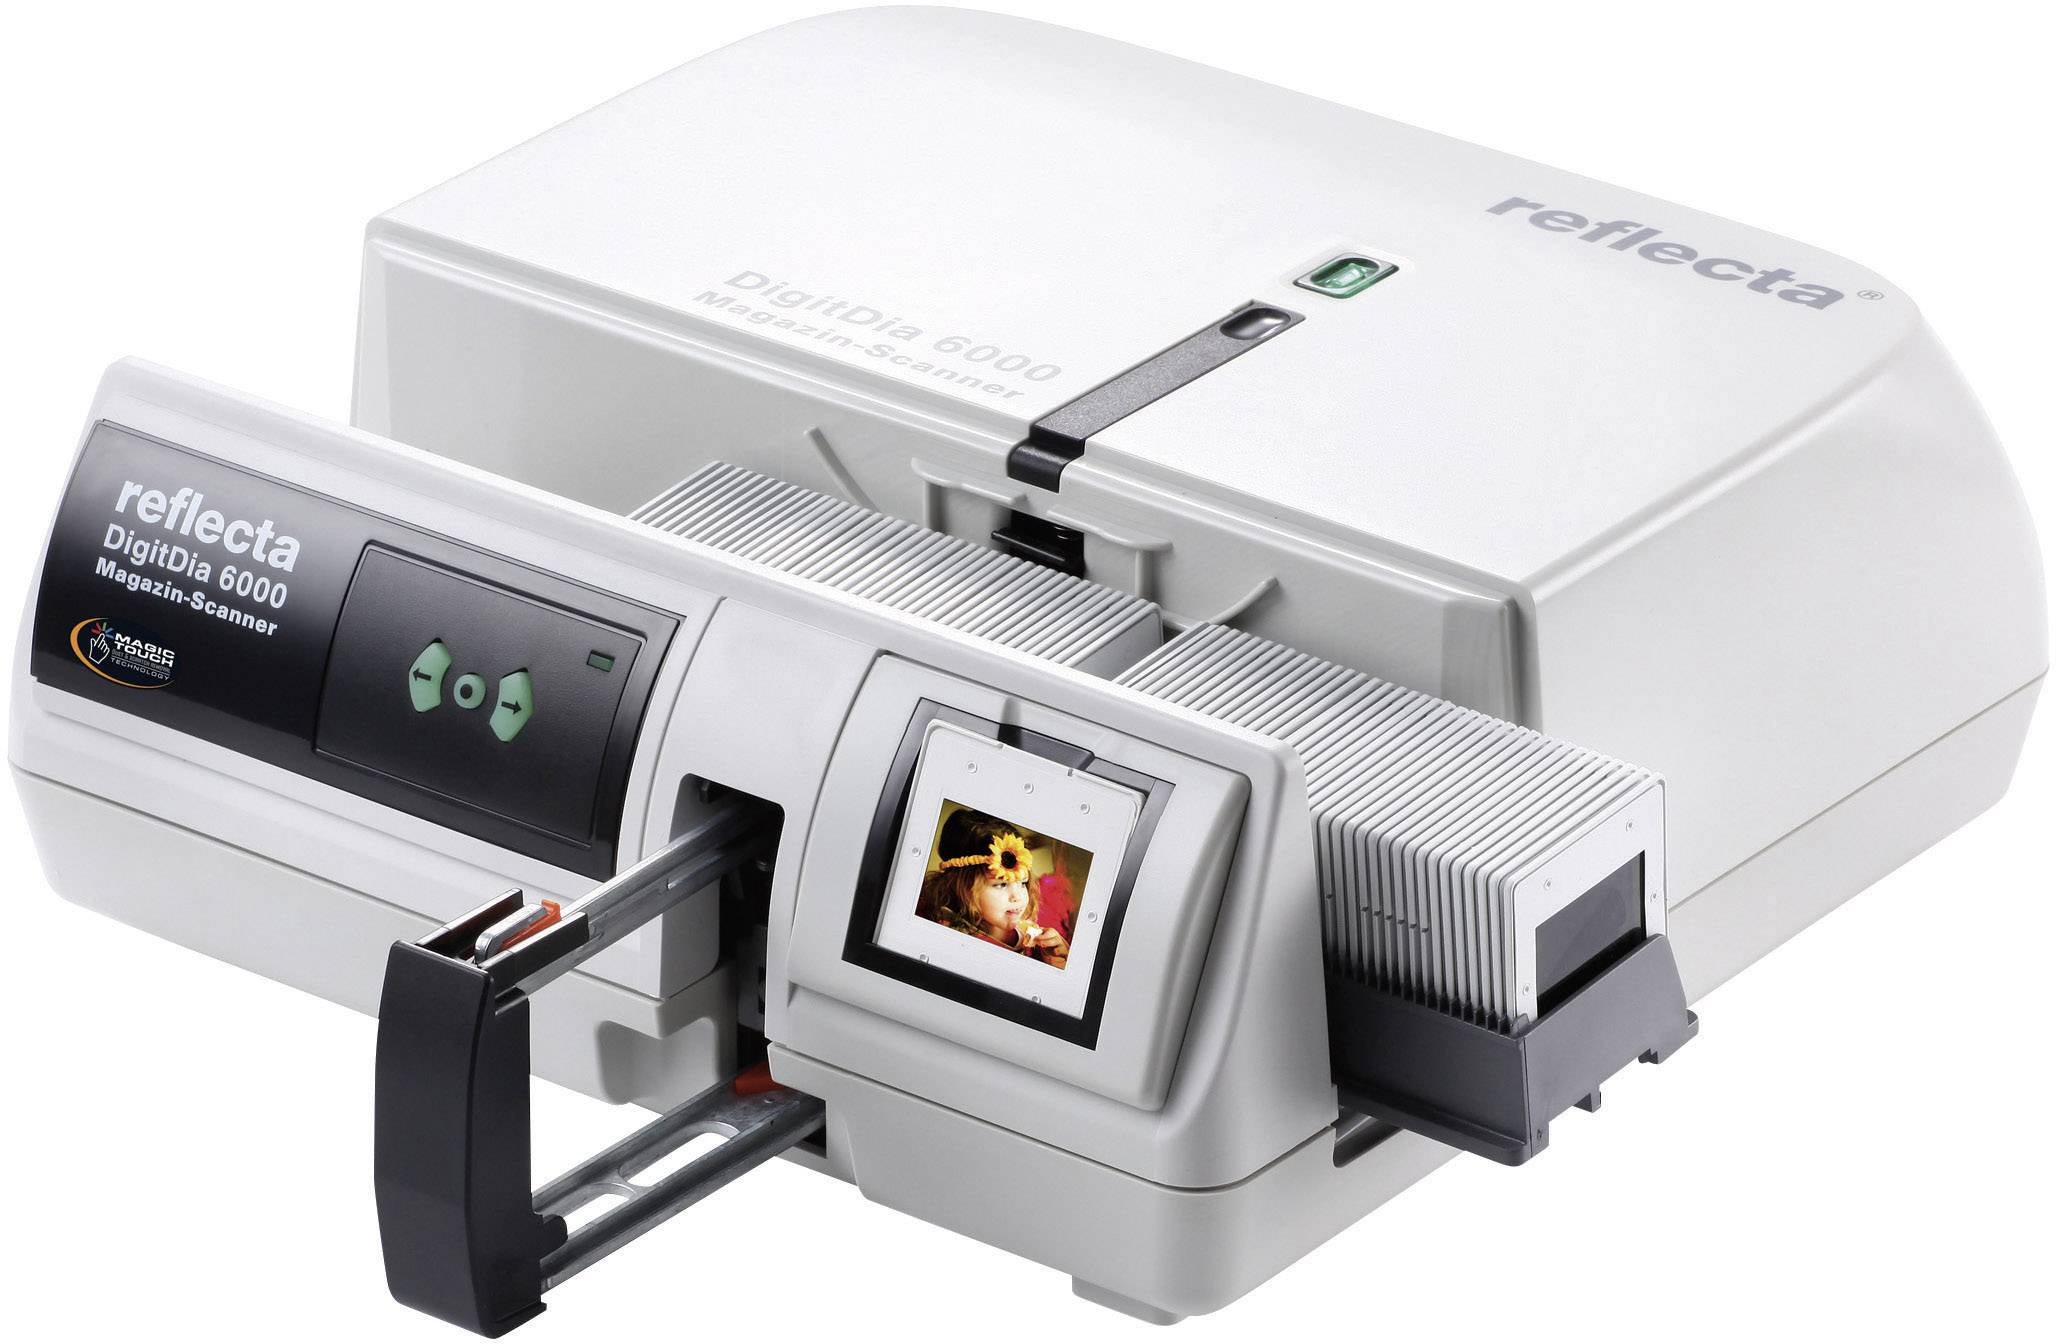 Пленочный сканер фото. Agfa scan t5000. Сканер для оцифровки негативов фотоплёнки 60мм. Сканер XL-6000. Слайд сканер.